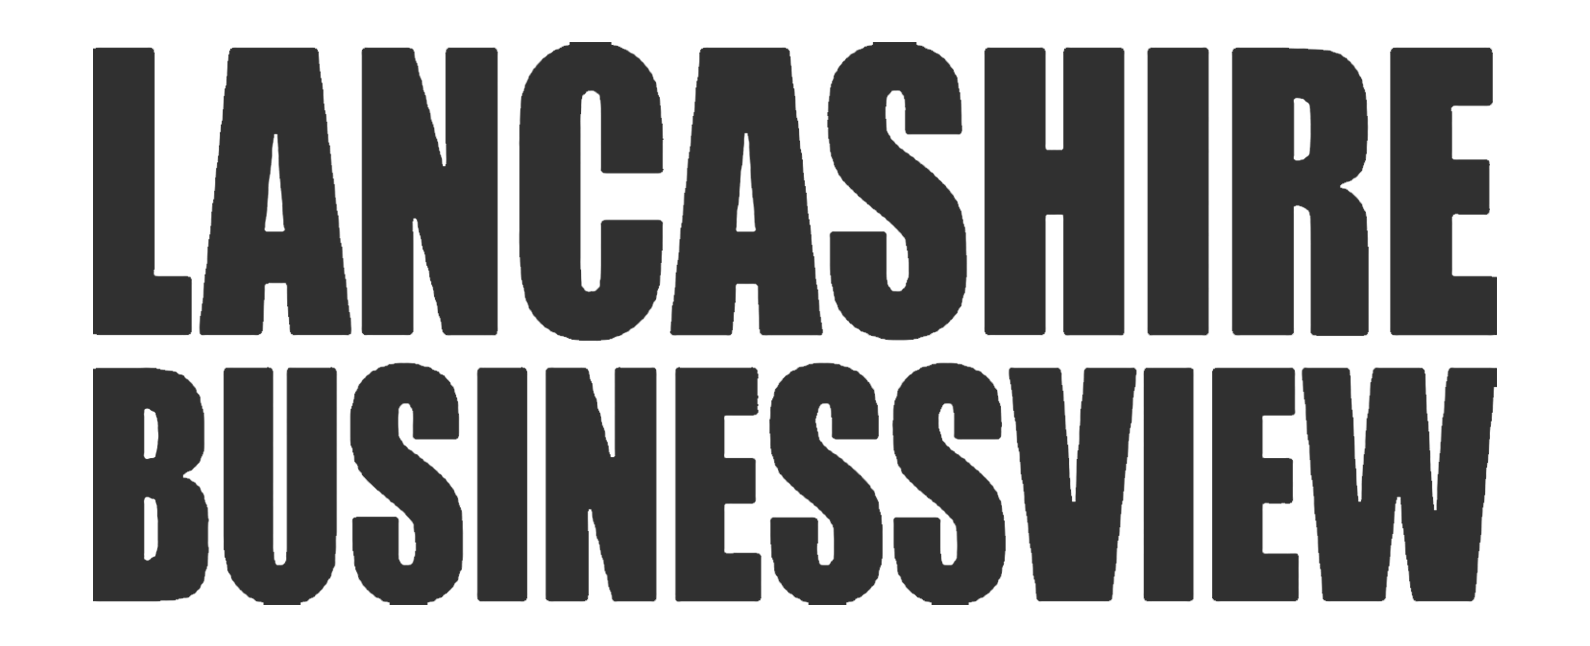 lancashire business view black logo